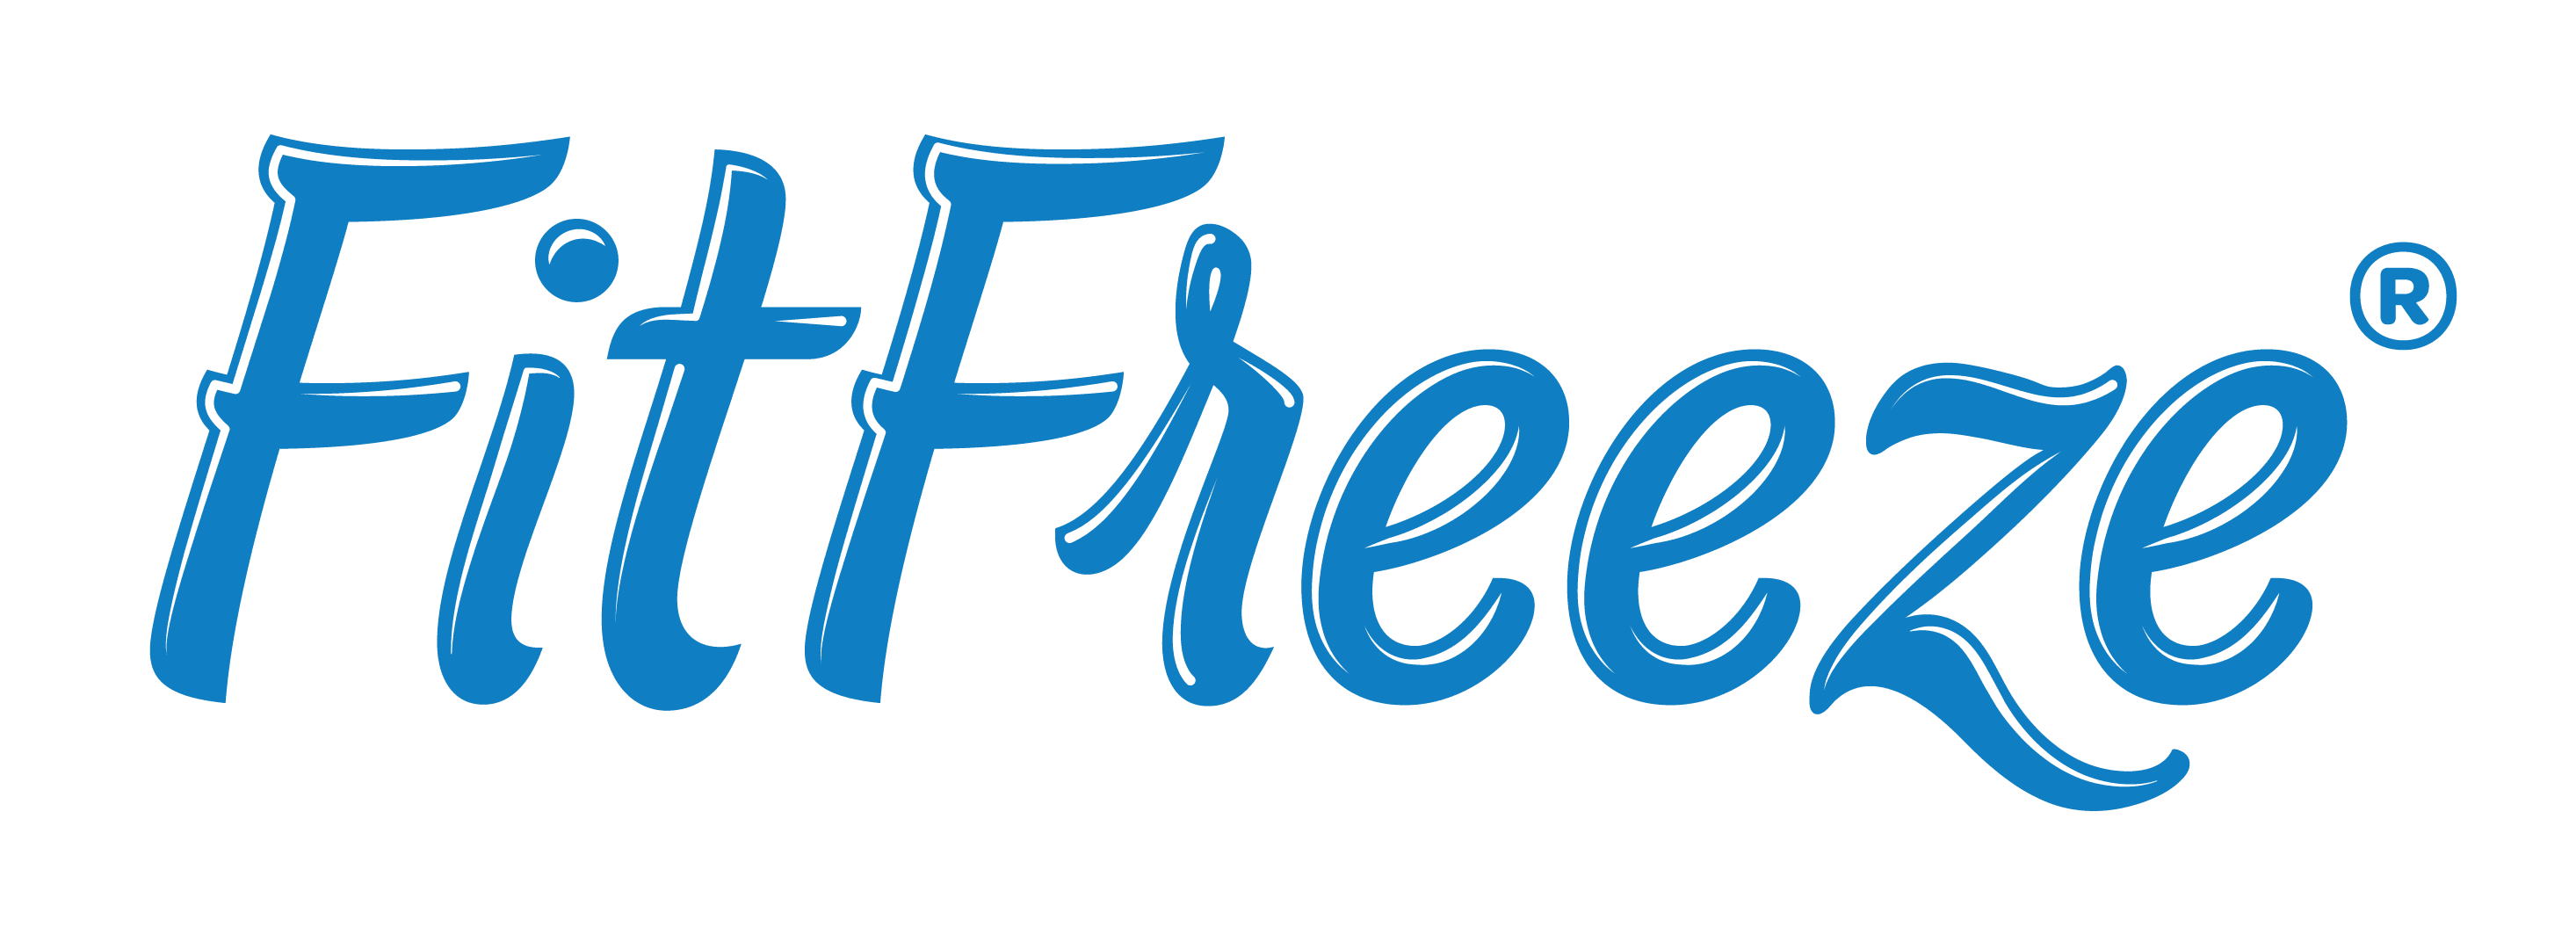 FitFreeze logo